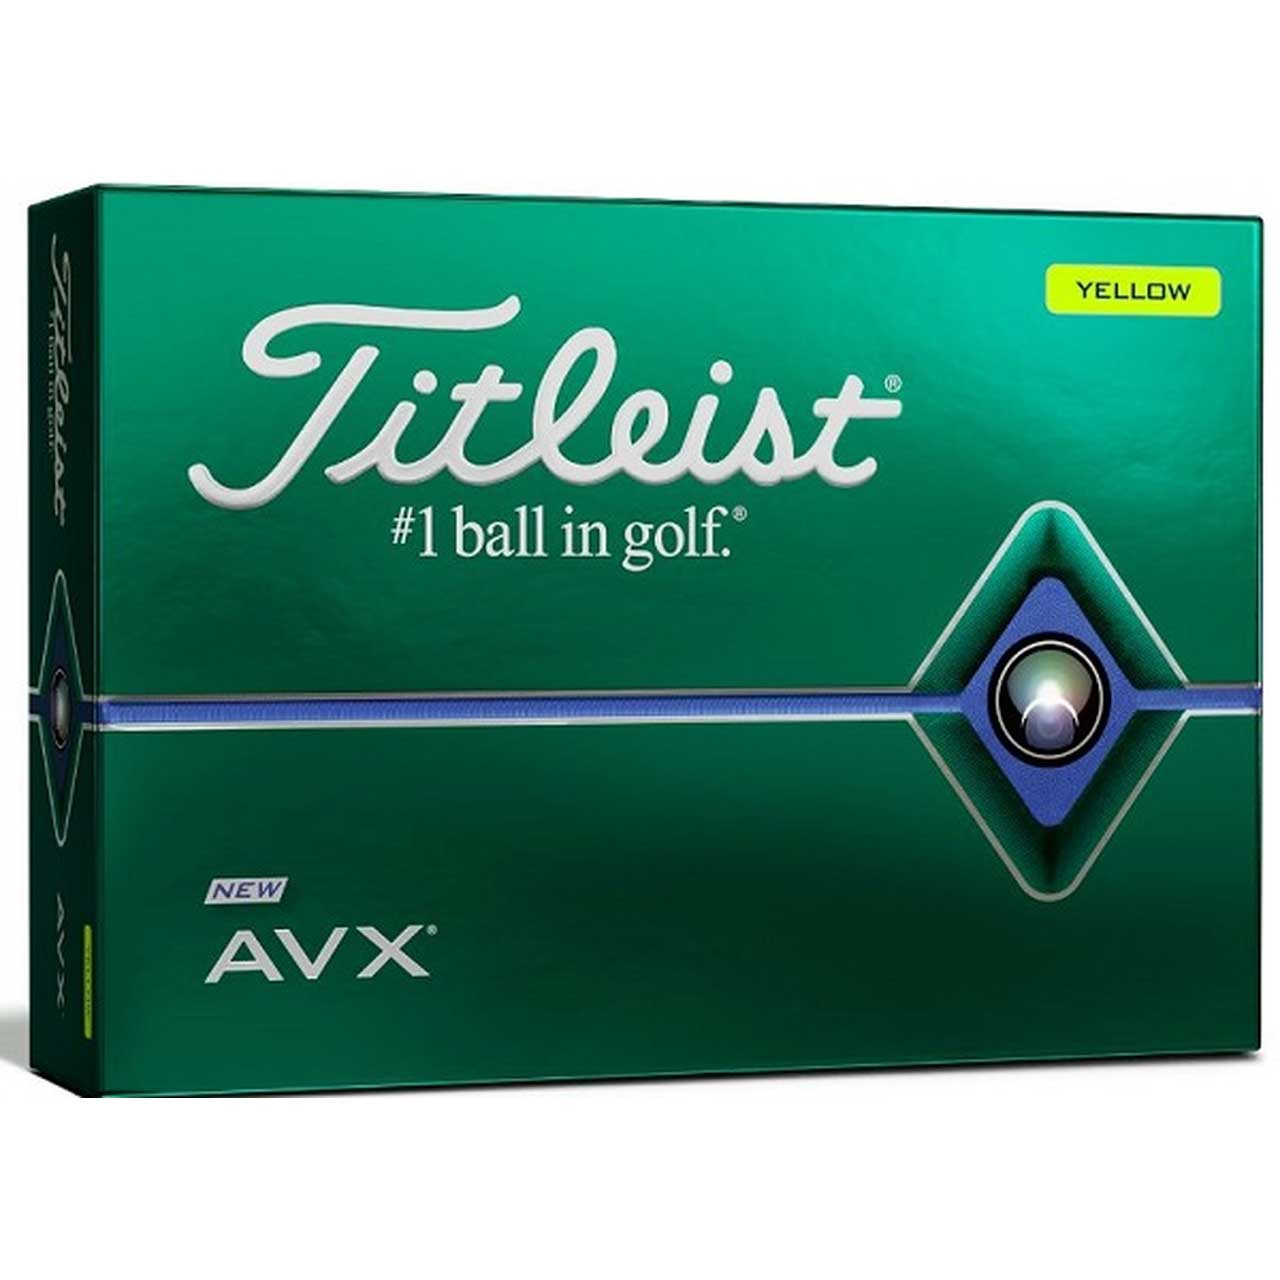 Personalized Titleist AVX Yellow Golf Balls